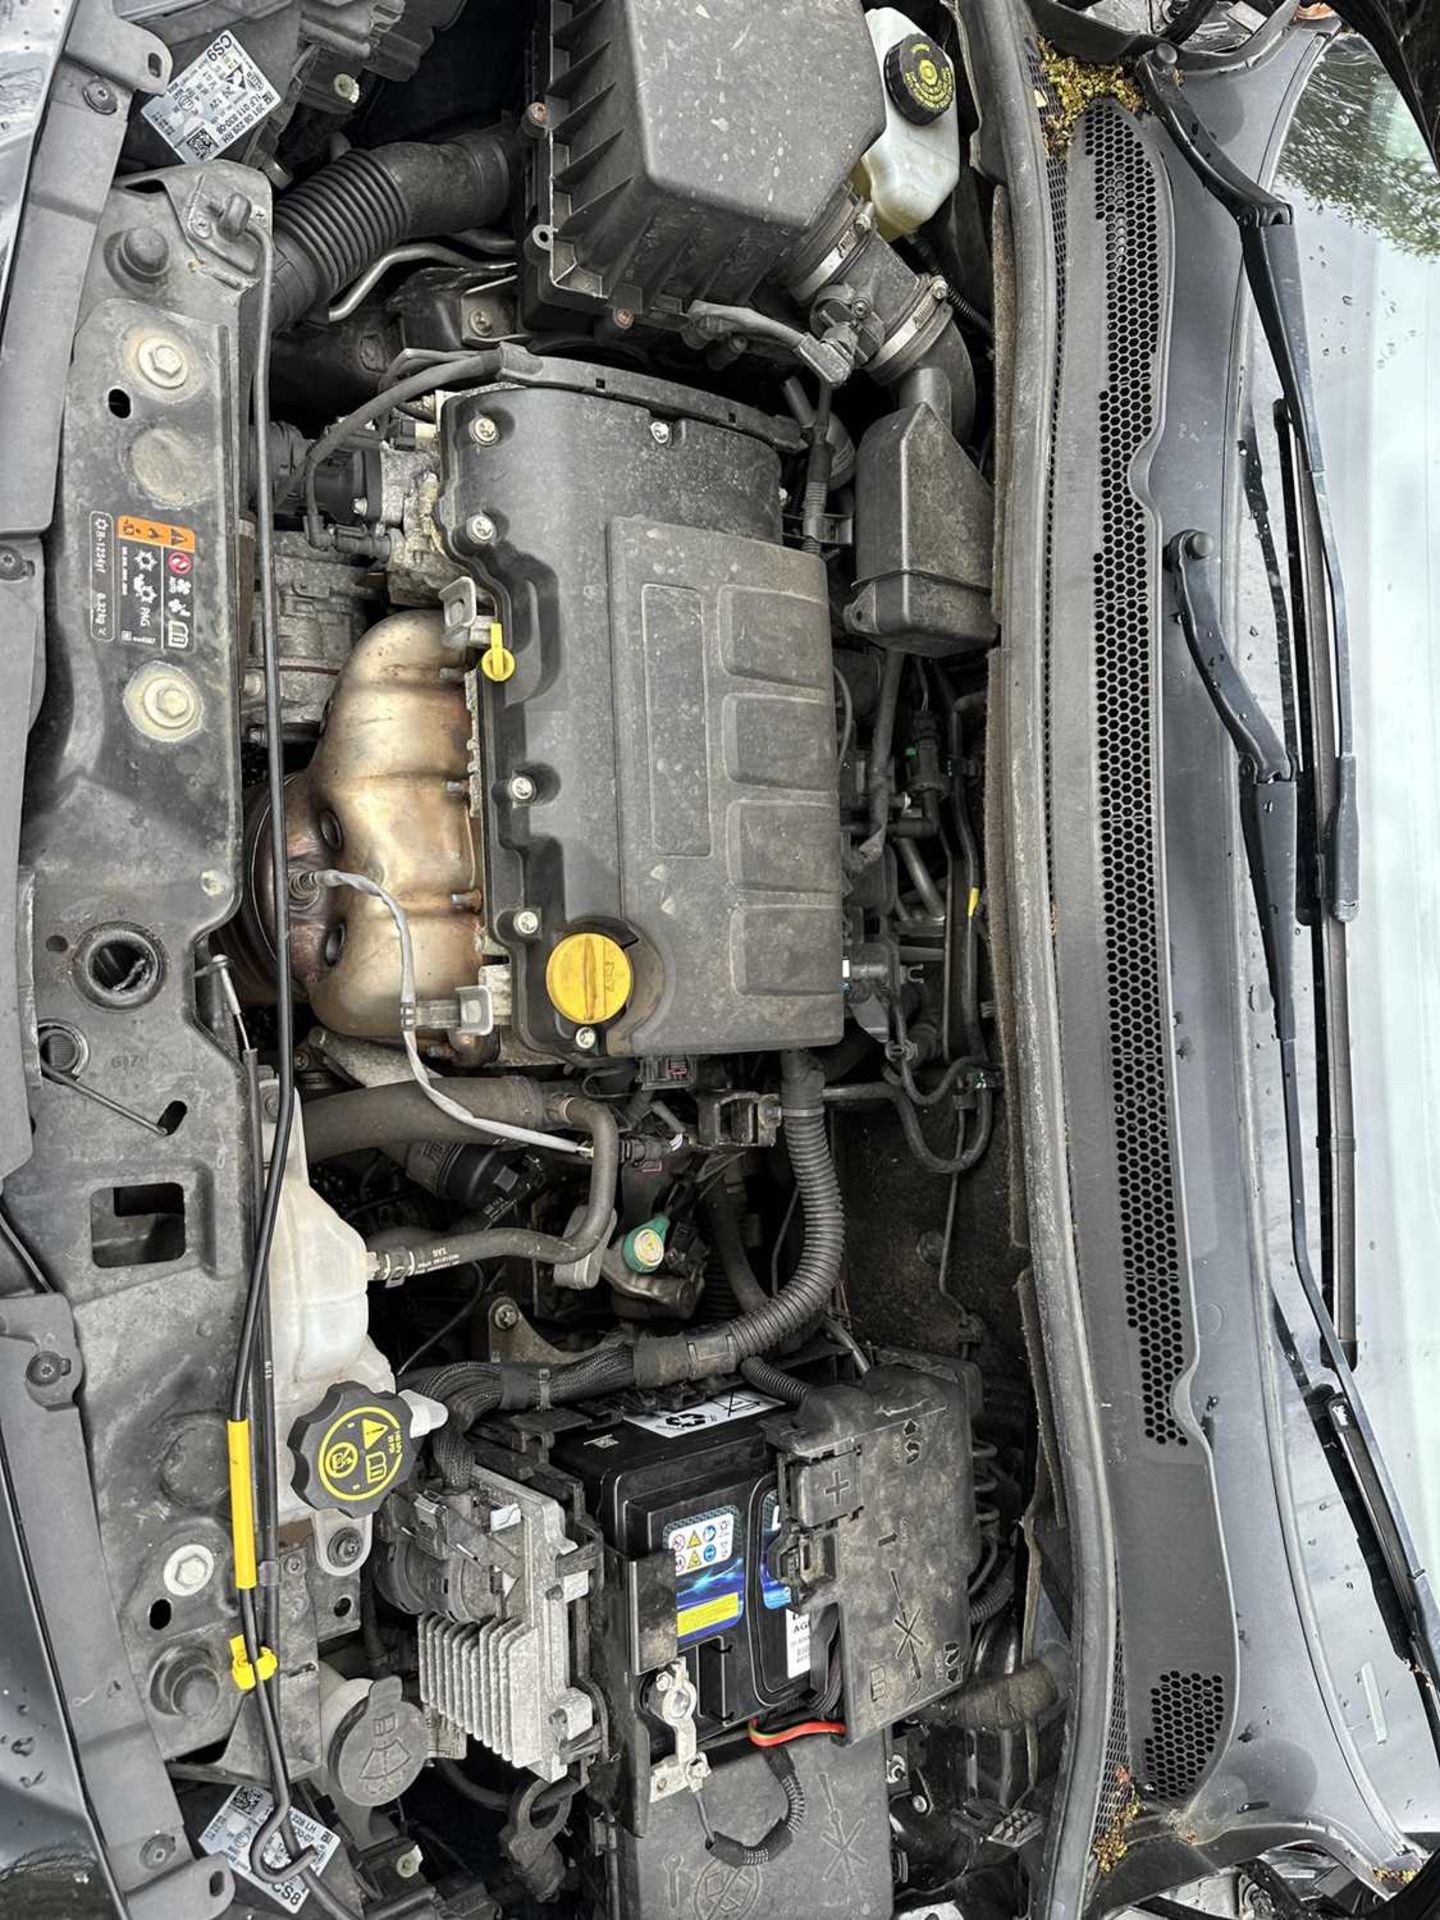 2019 Vauxhall Corsa SRI VX - Line Nav Black, 5 door hatchback, manual, reg. no. VU19 RYK - Bild 14 aus 15